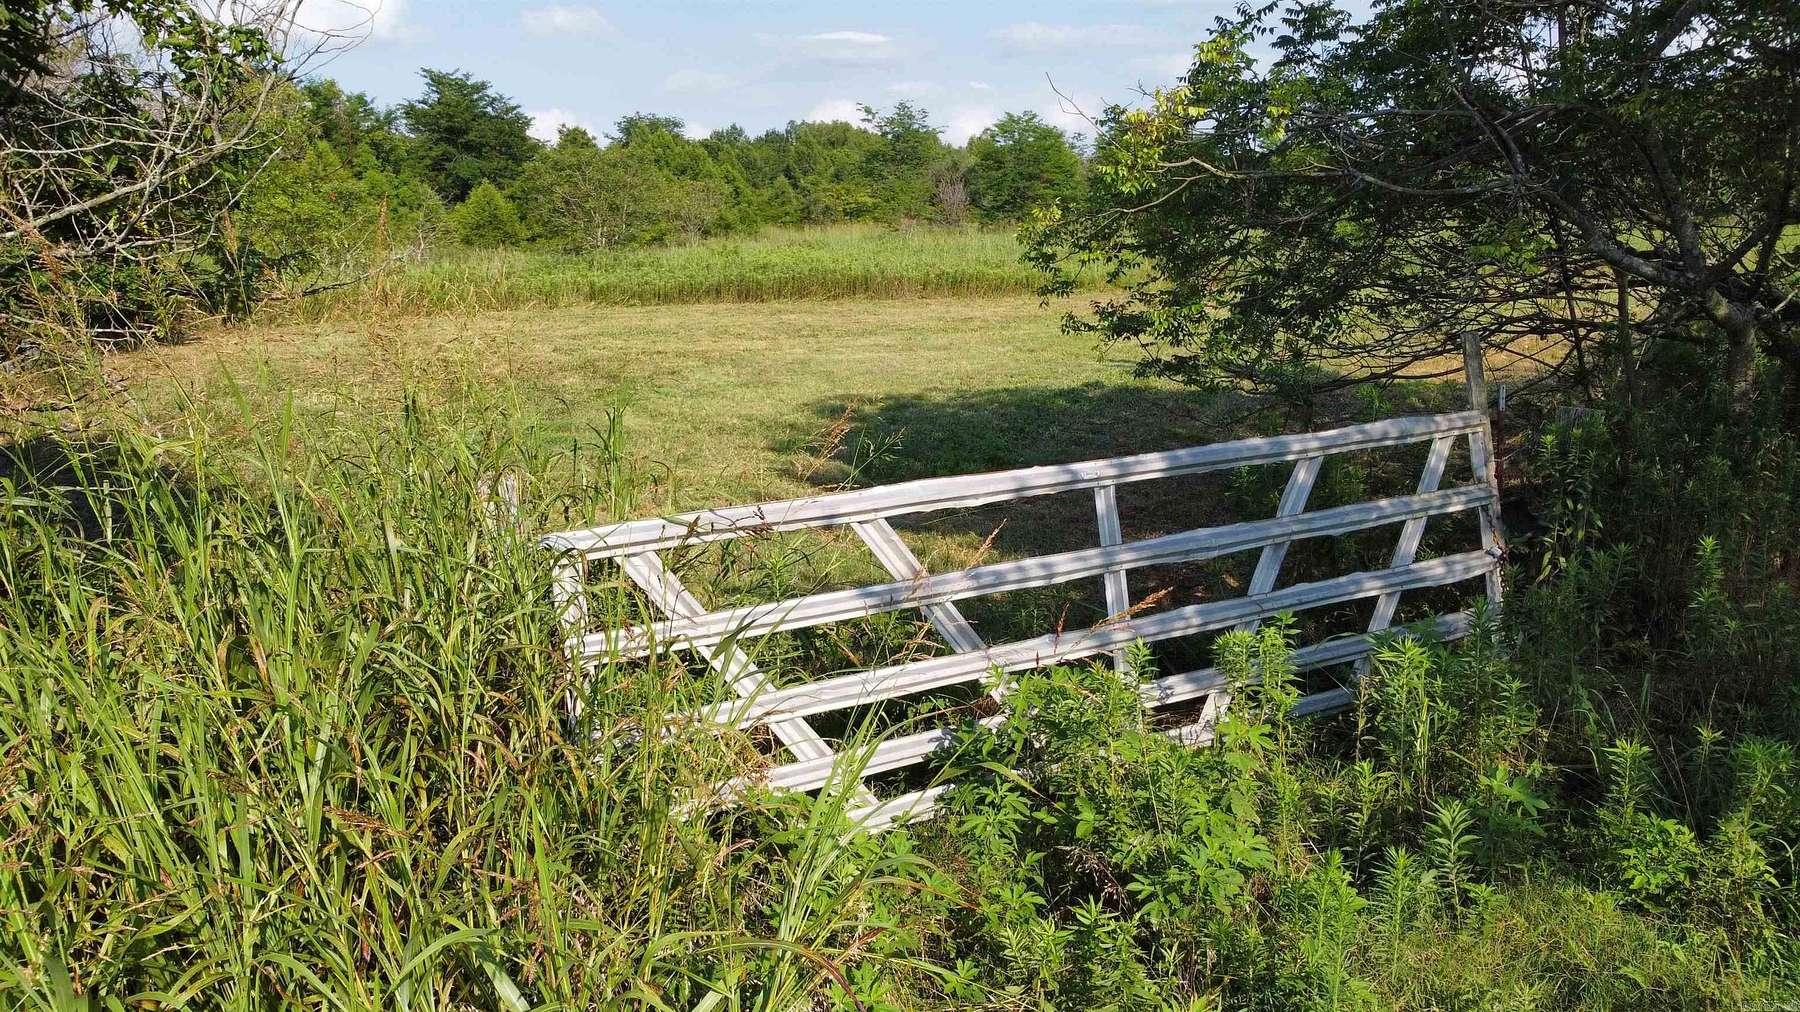 279 Acres of Recreational Land & Farm for Sale in Little Rock, Arkansas